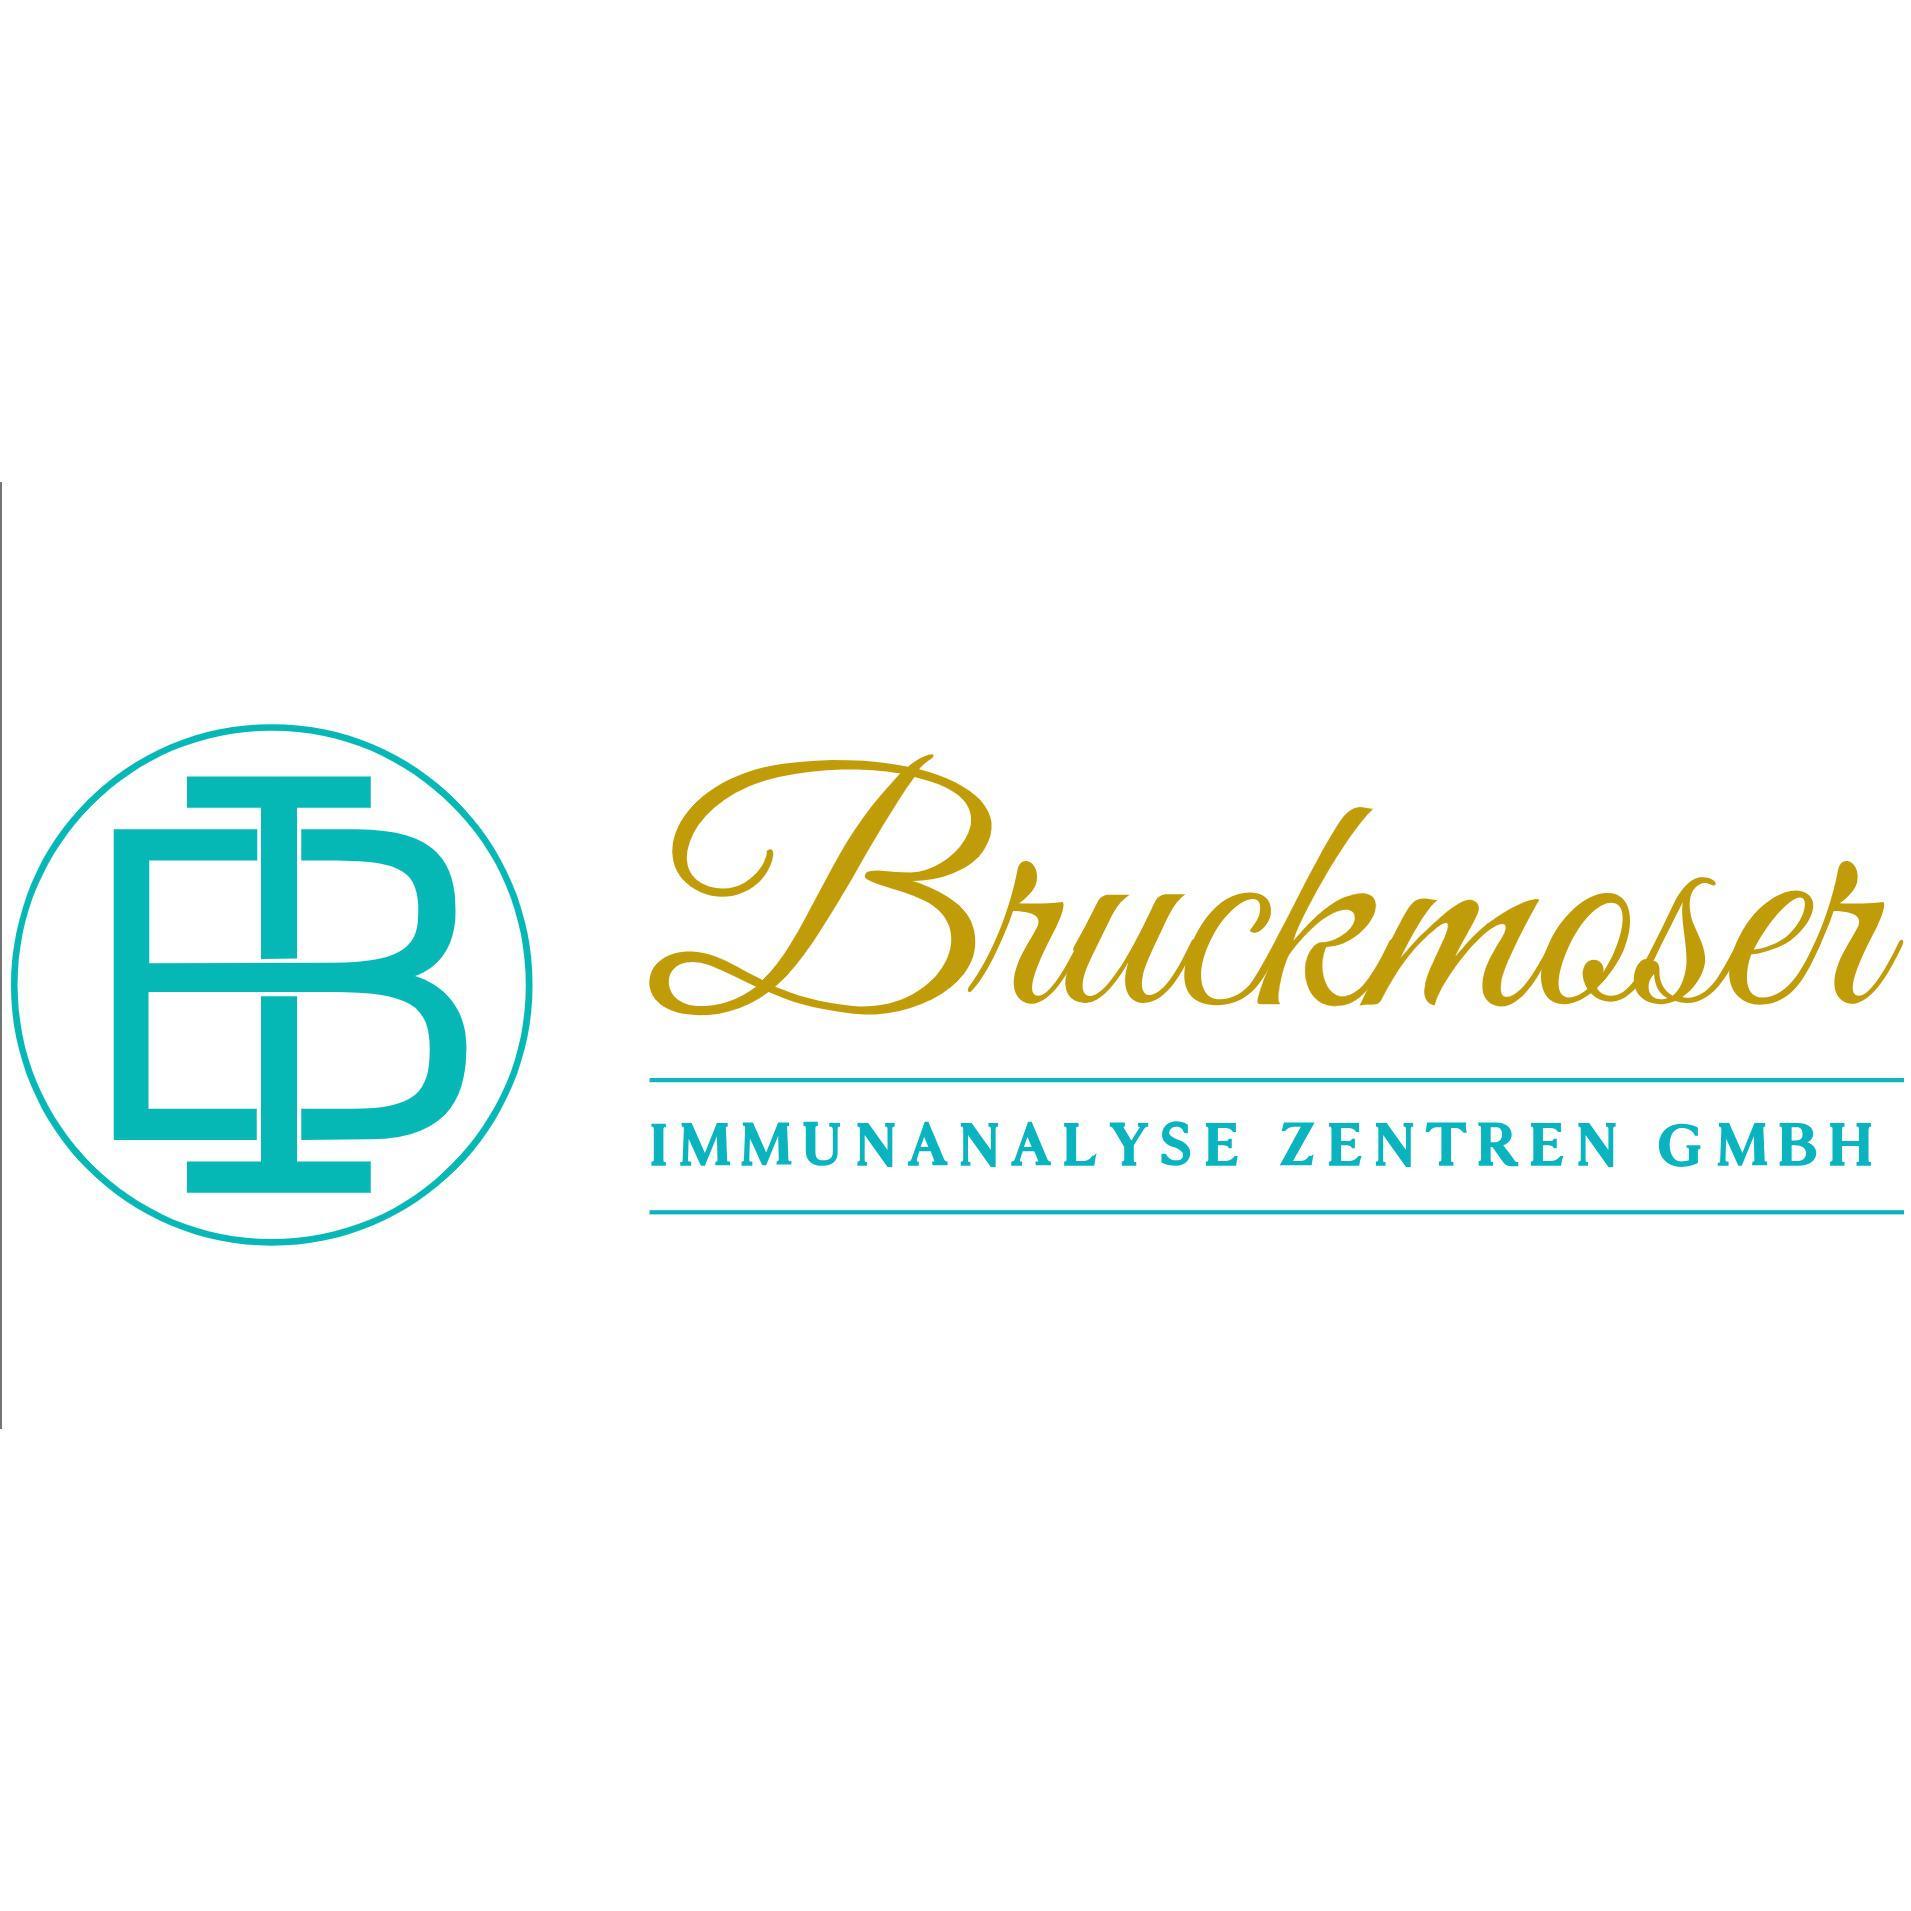 Bruckmoser Immunanalyse-Zentren GmbH in Dresden - Logo